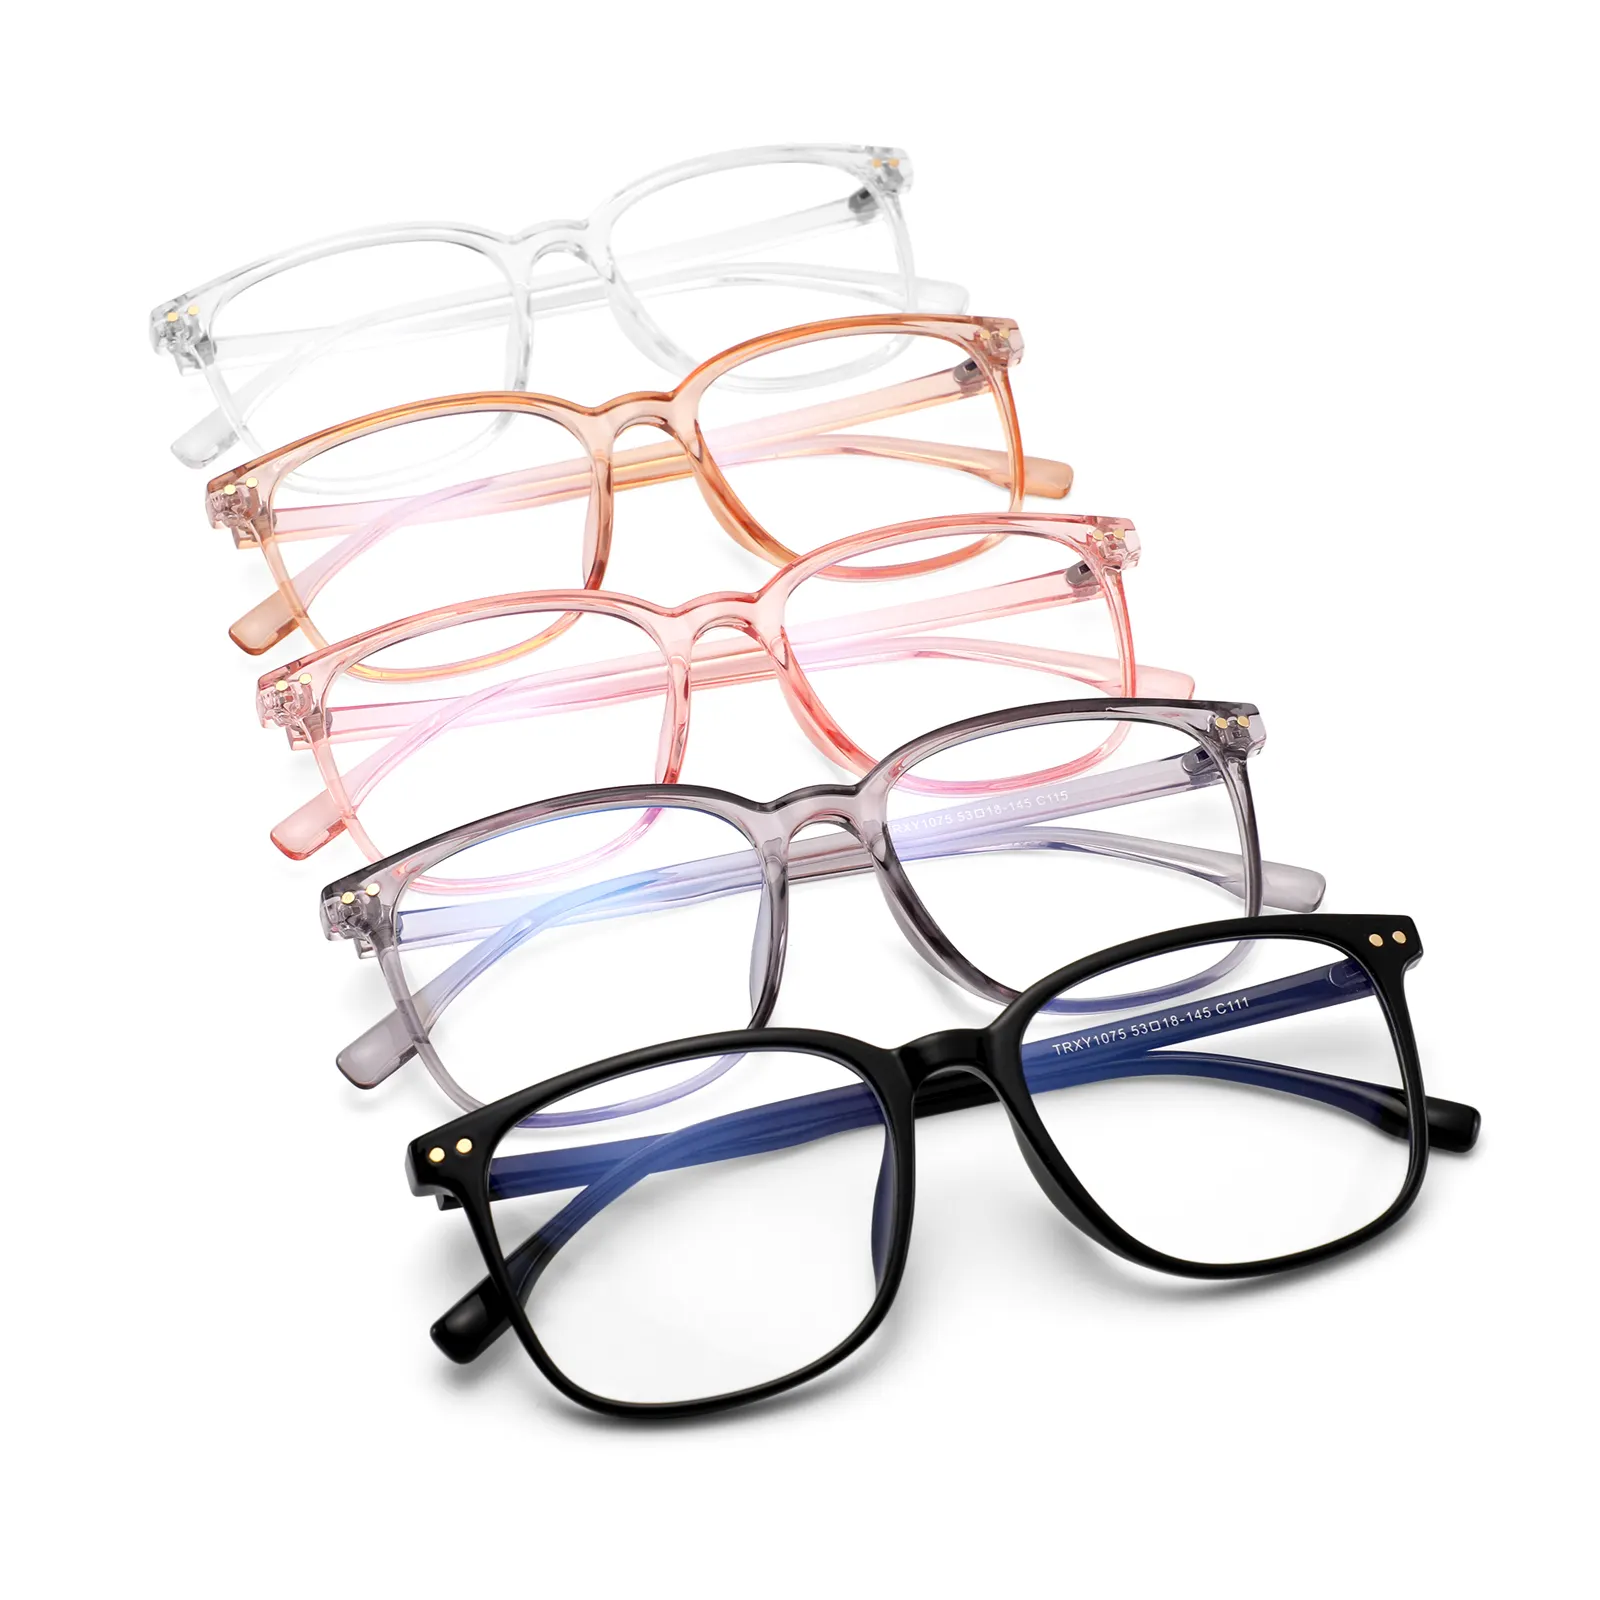 Hot selling high quality eye glasses wholesale blue light blocking glasses optical frame eyewear